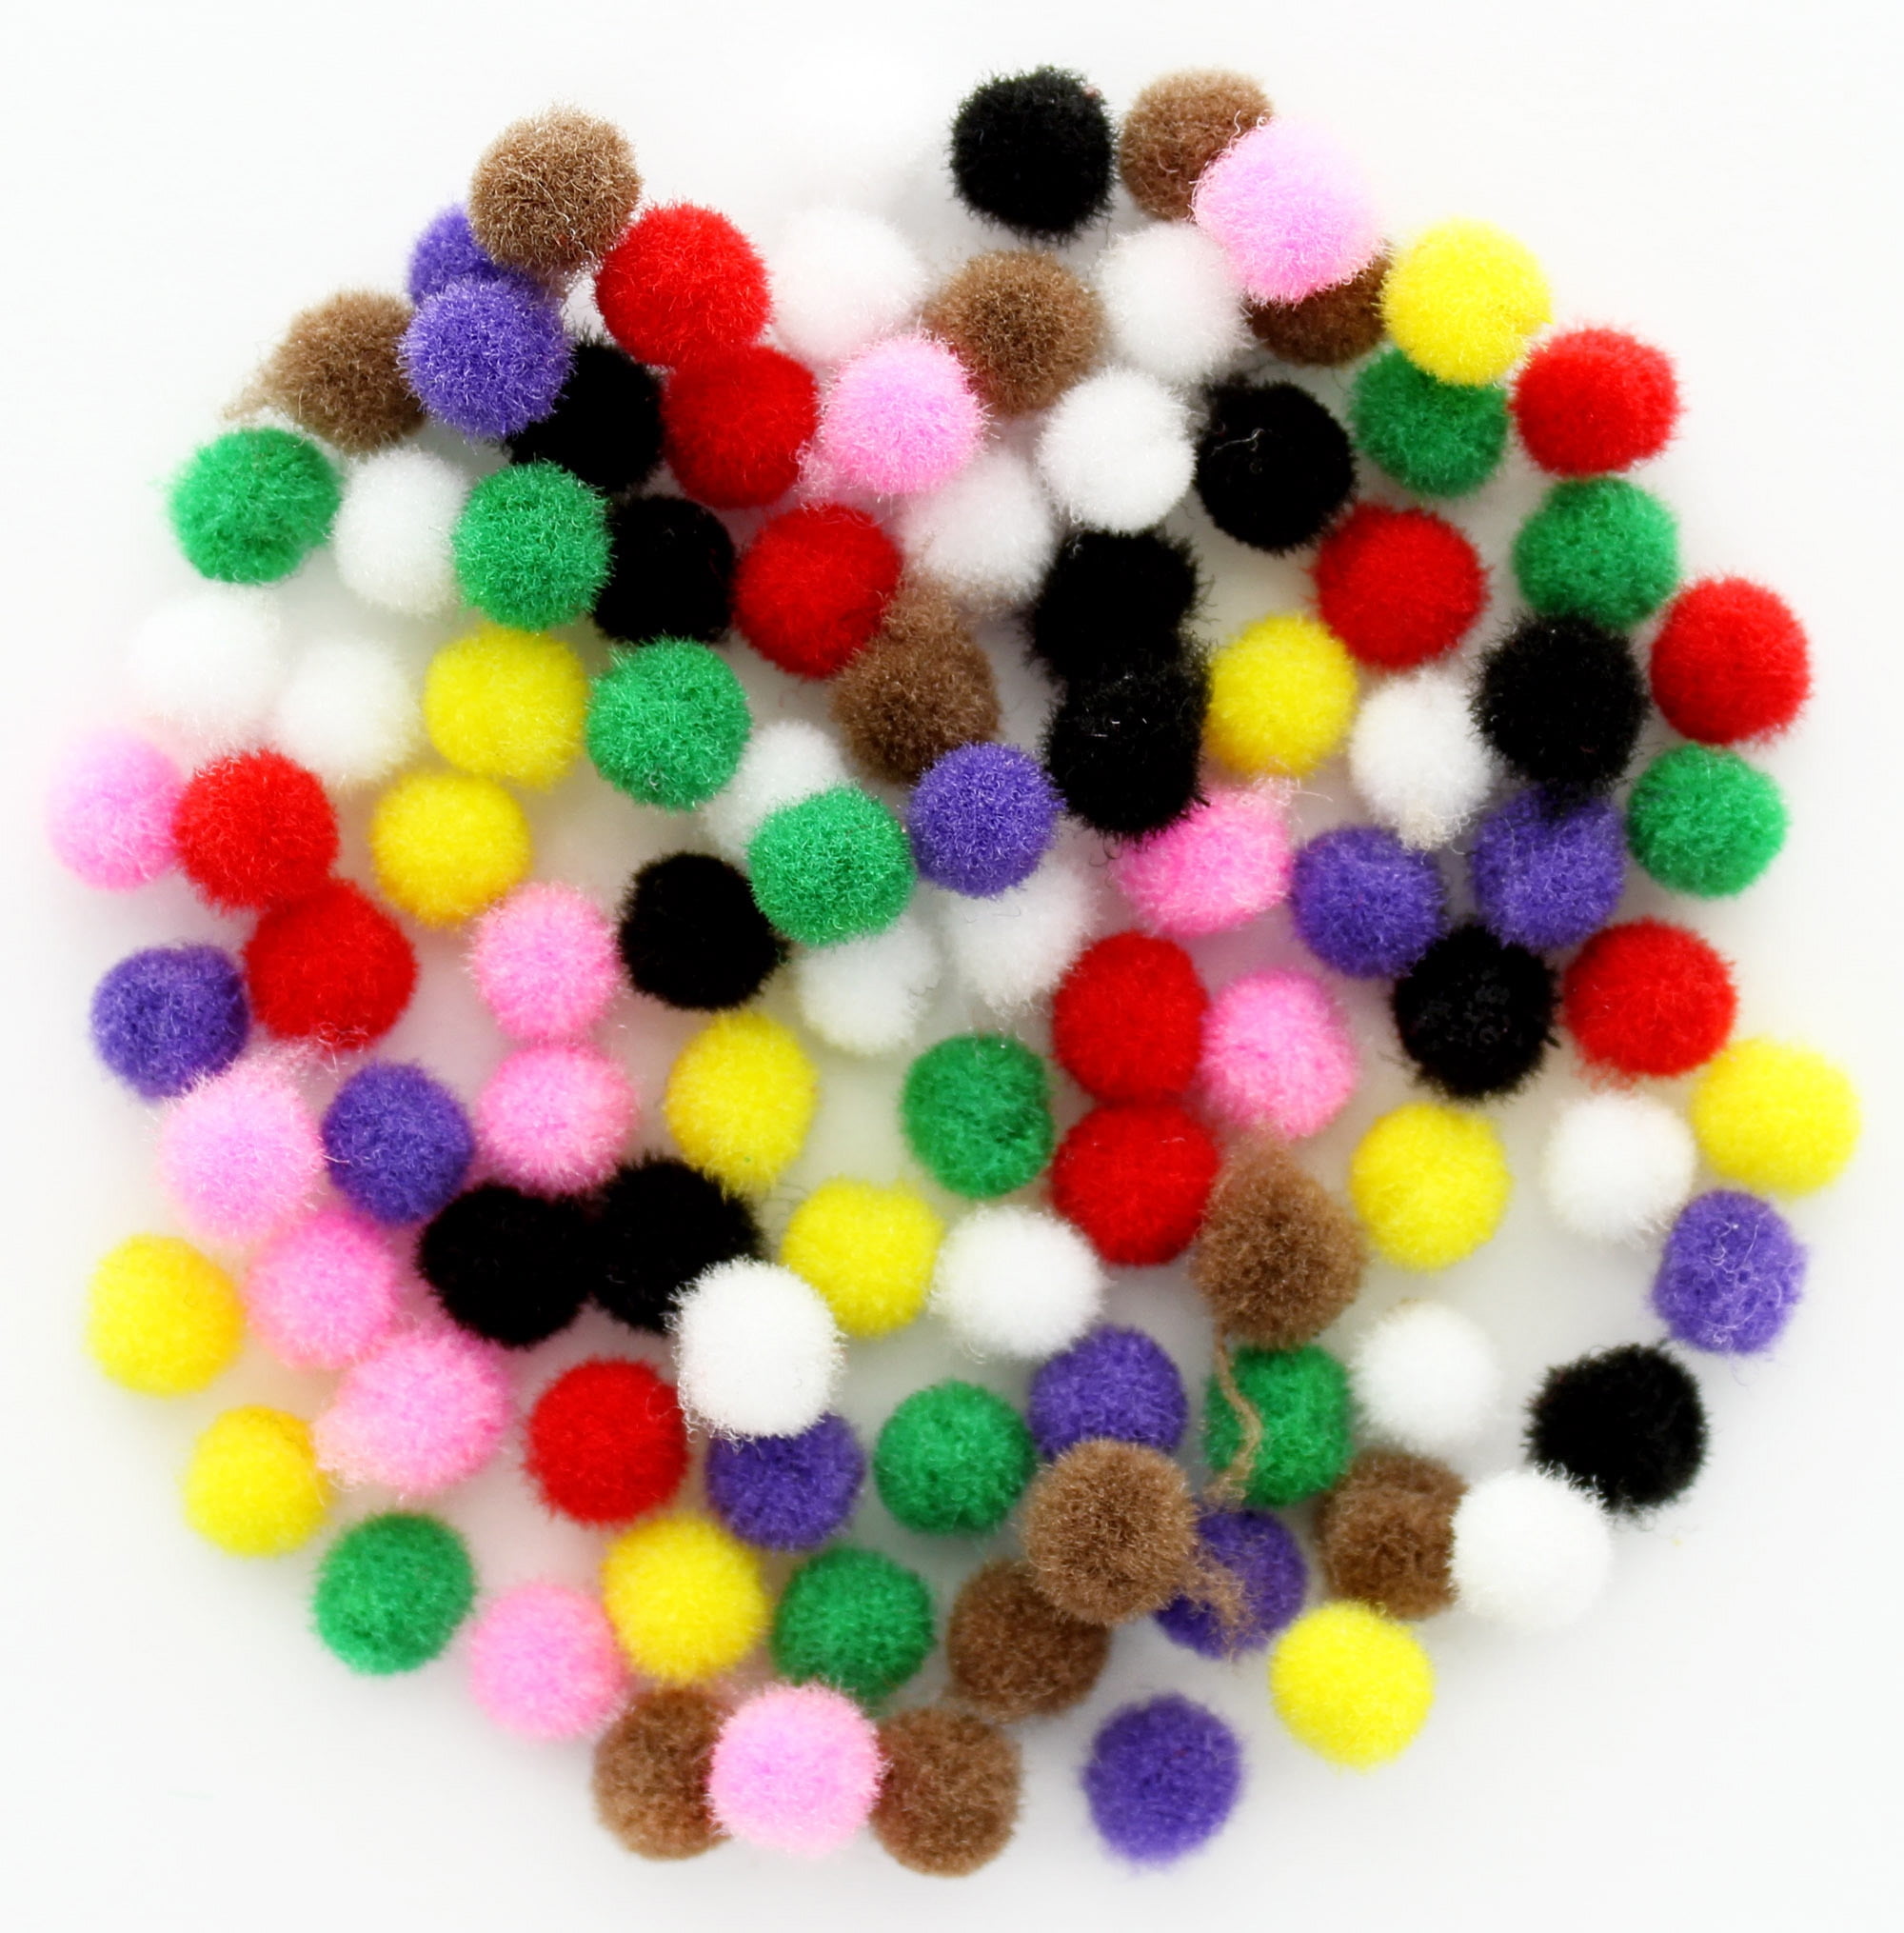 [250 Pcs ] 150 1 inch Black Craft Pom Poms + 100 Multicolor Pom Pom Balls, Small Pom Poms Assorted Pompoms for Crafts Projects and DIY Creative